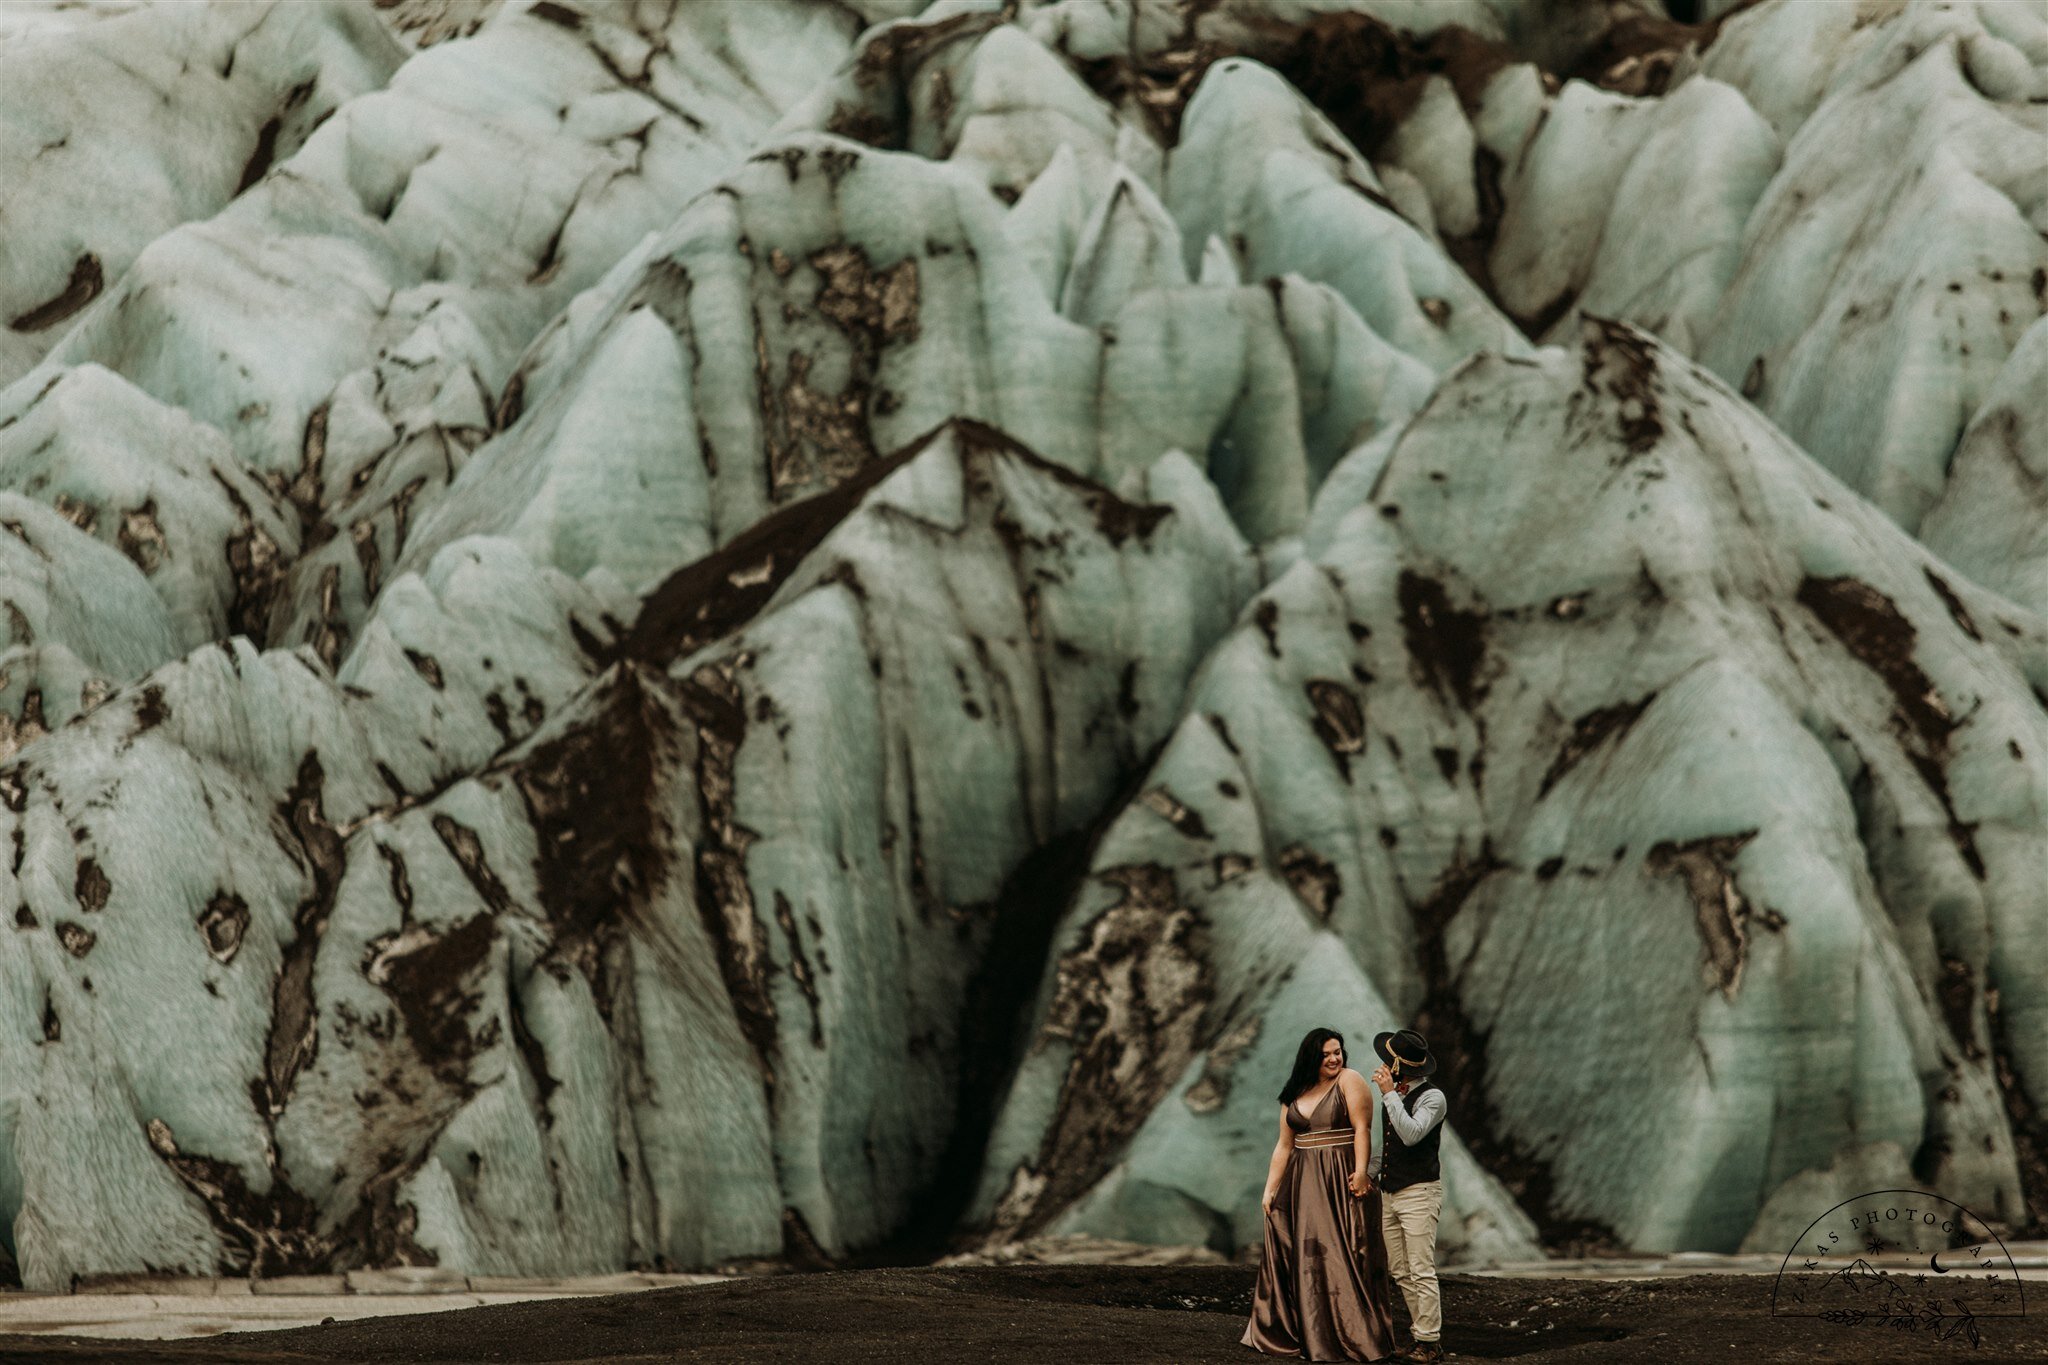 Glacier Wedding photos in Iceland | Iceland elopement photographer | zakas photography 